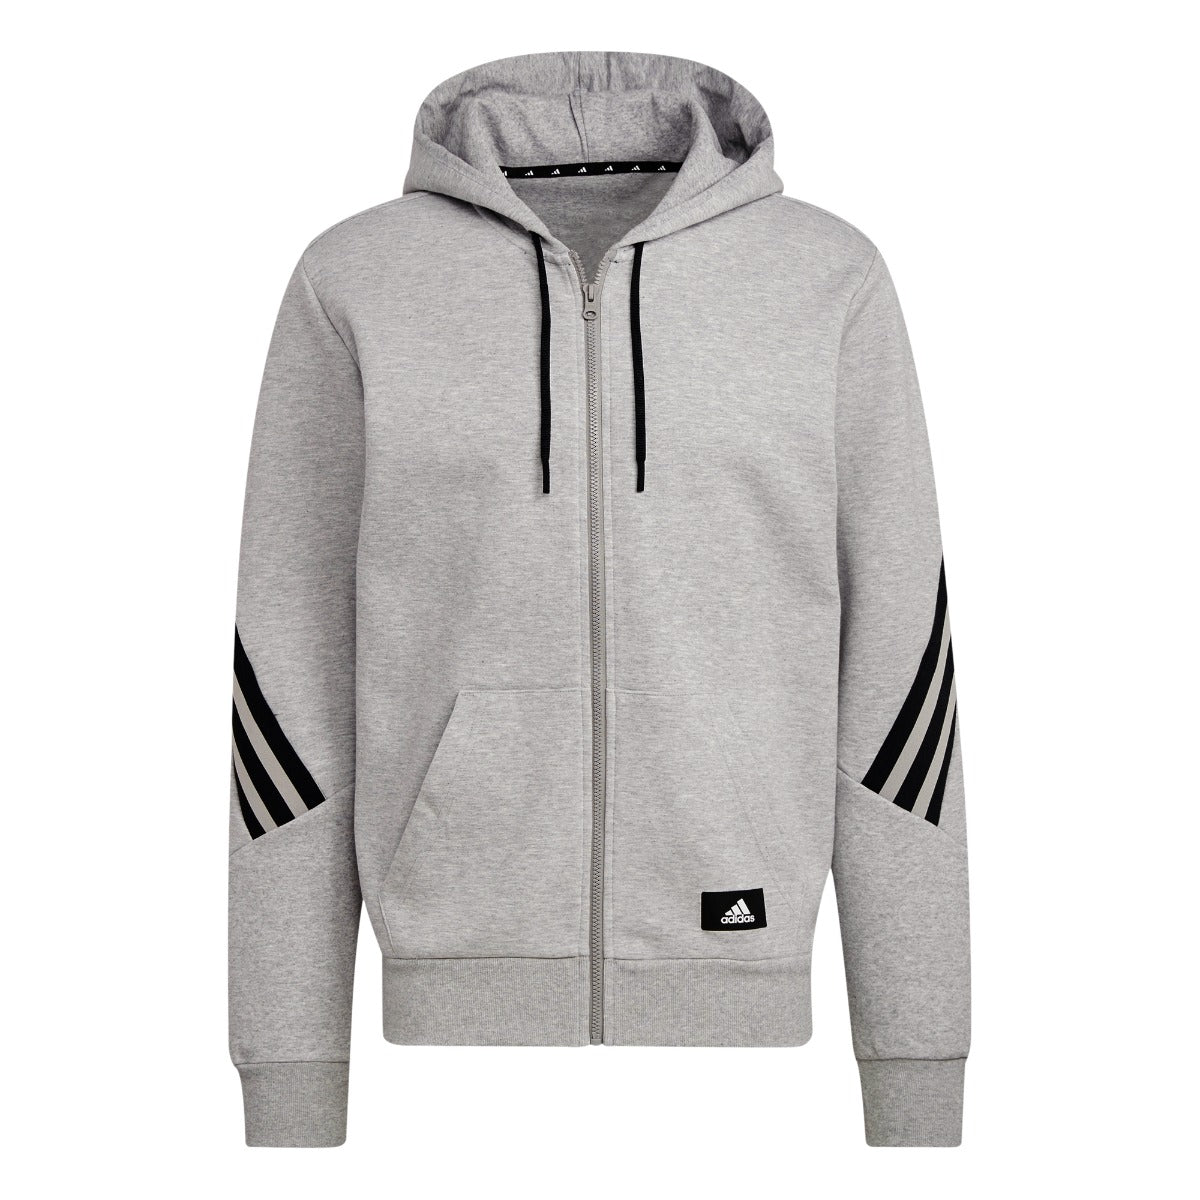 Adidas Stripes Hooded Jacket - Gray